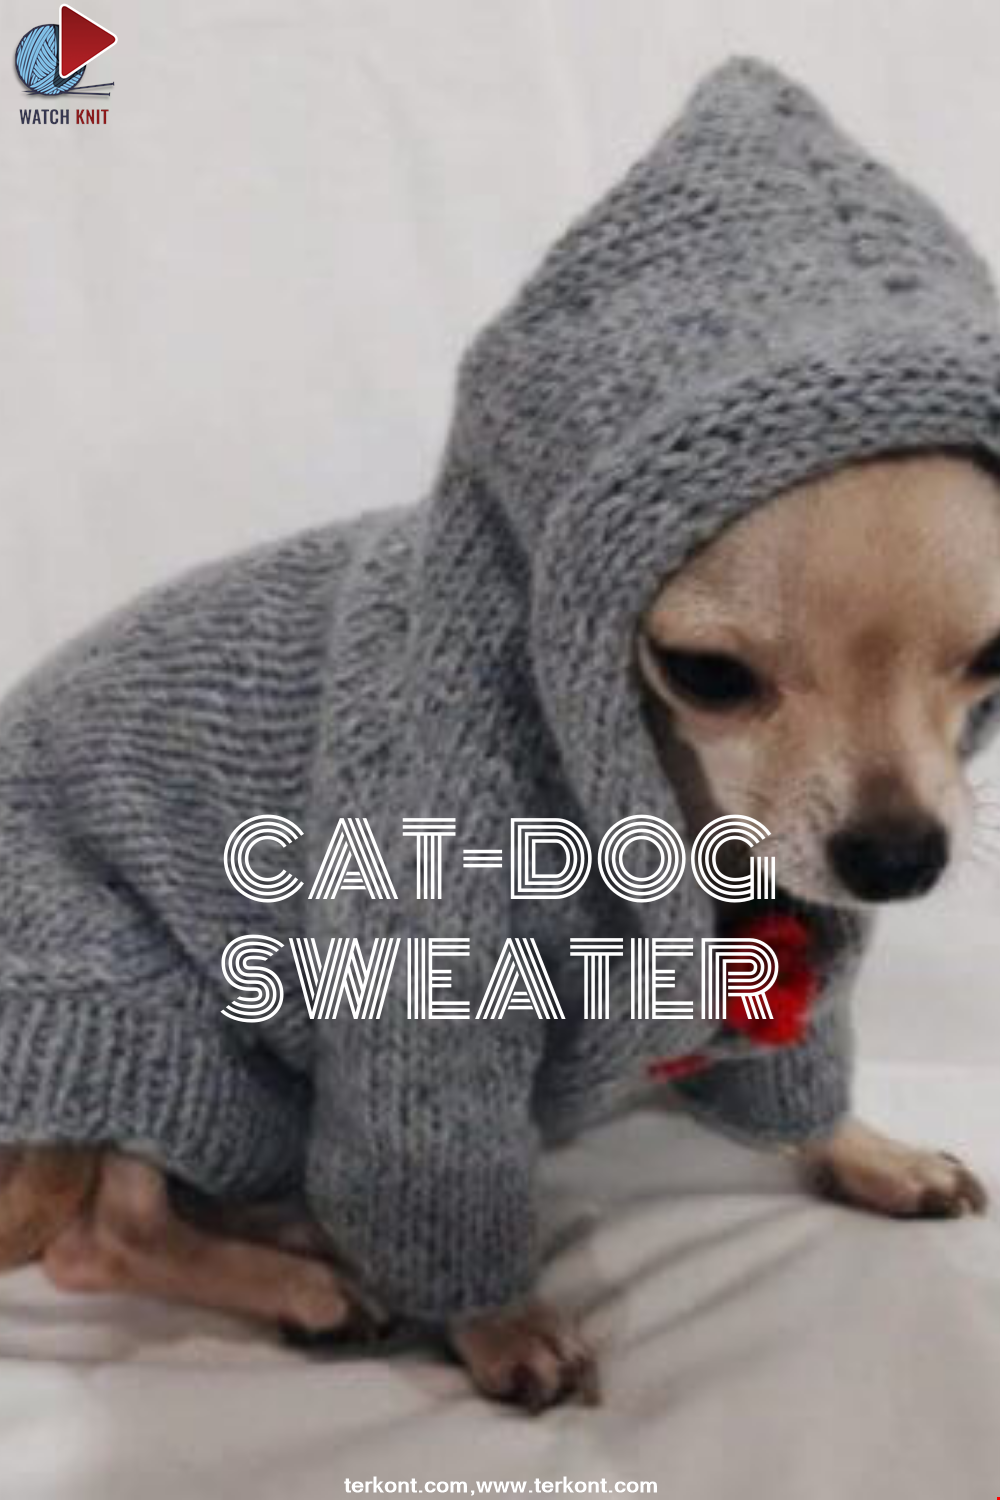 Cat-Dog Sweater Making